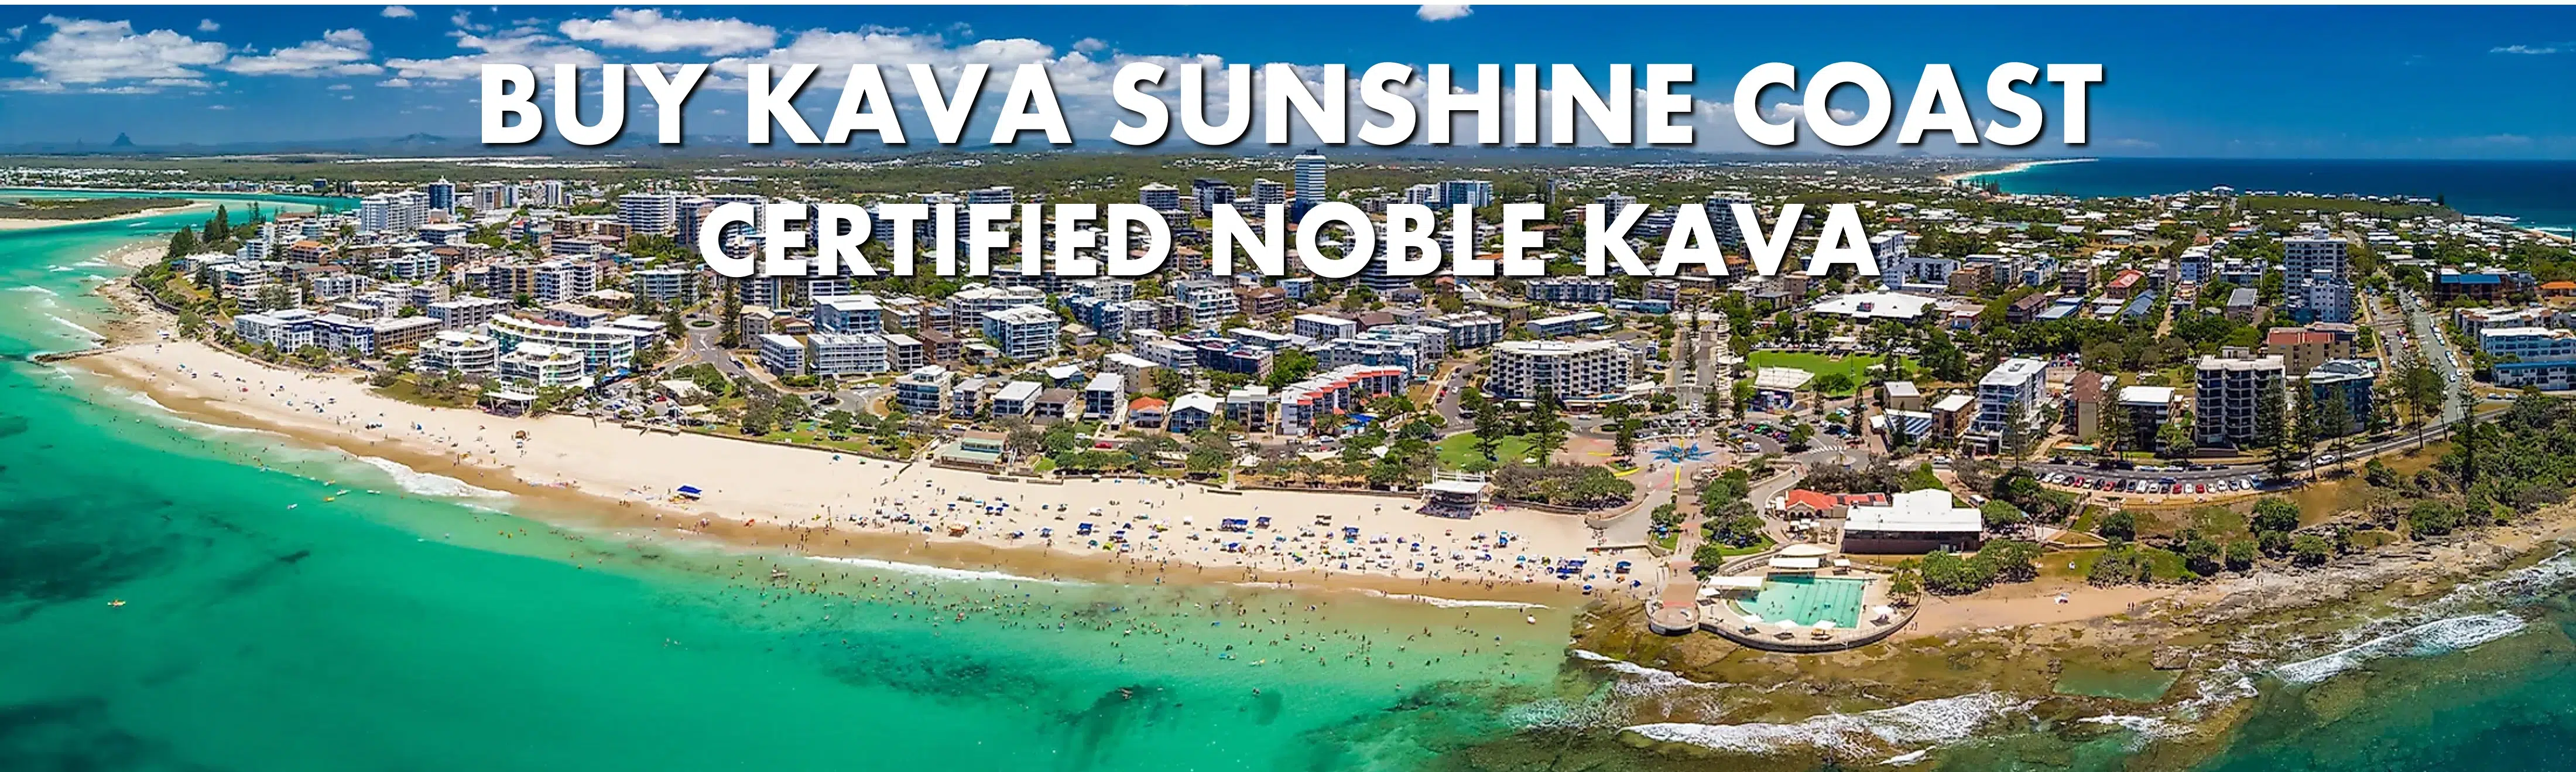 Aerial view of Sunshine Coast with caption Buy Kava Sunshine Coast Certified Noble Kava